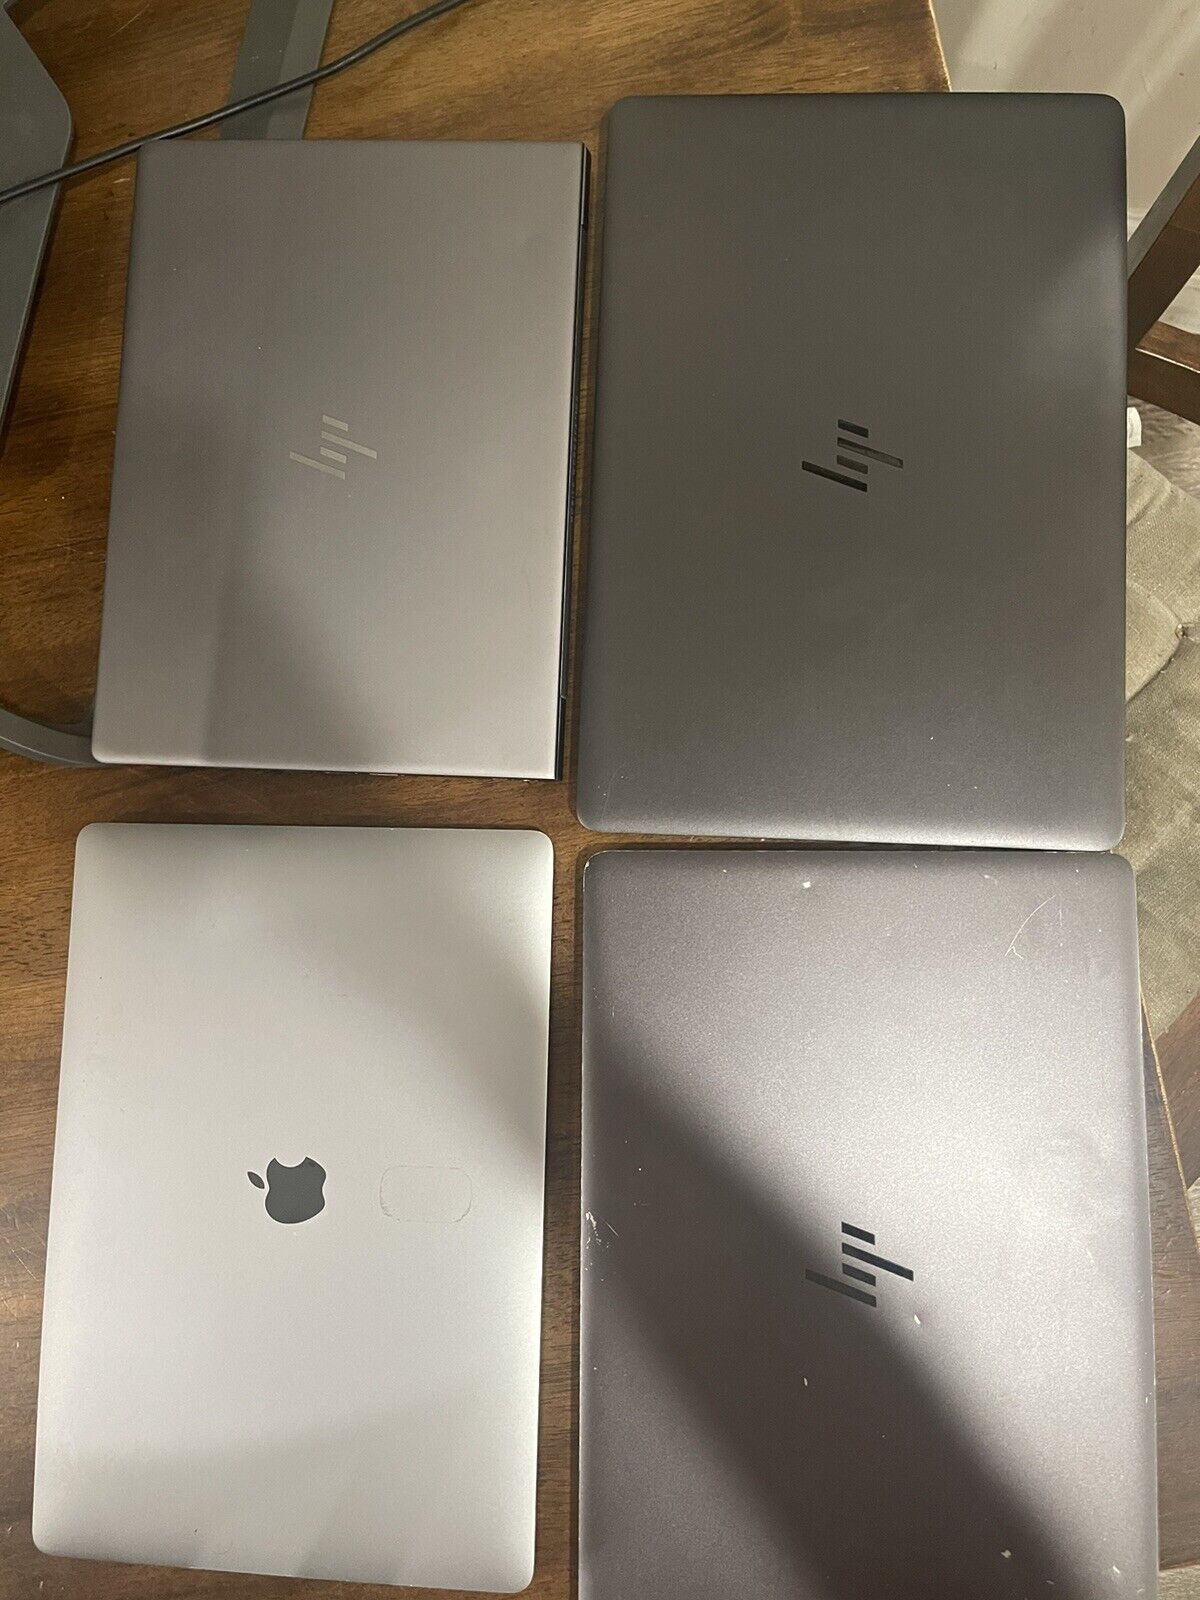 Lot of 7 | 1 Apple MacBook Pro & 3 HP Laptops + 3 Dell Chromebooks